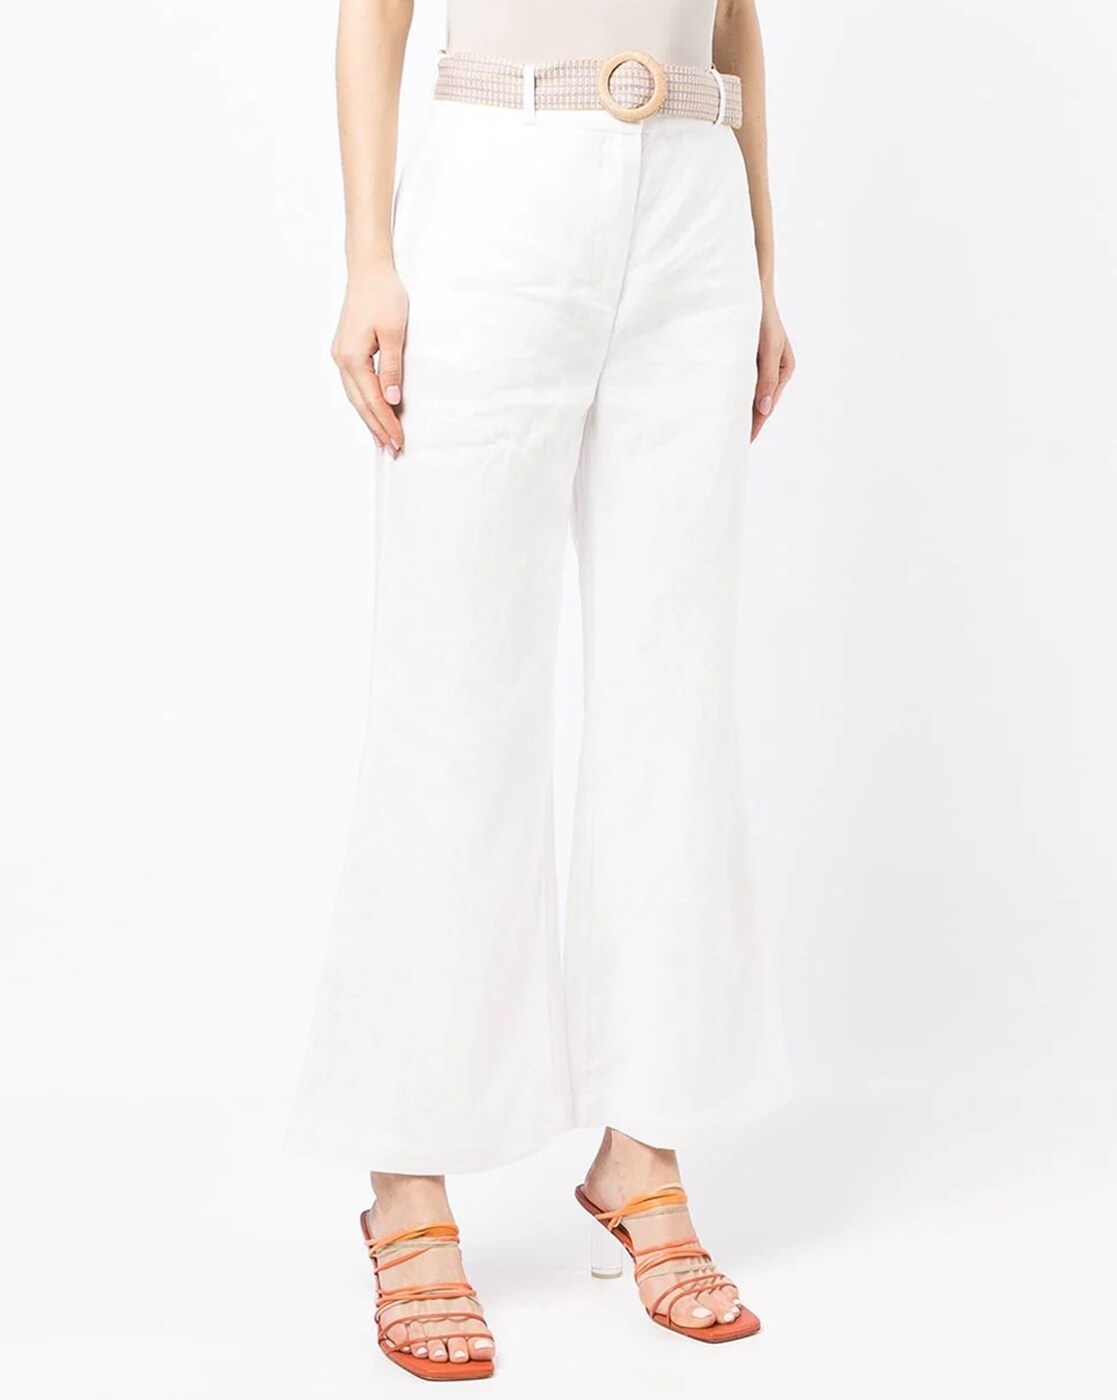 Alfani Petite Cropped Lace-Inset Pants, Size 14Petite/White 